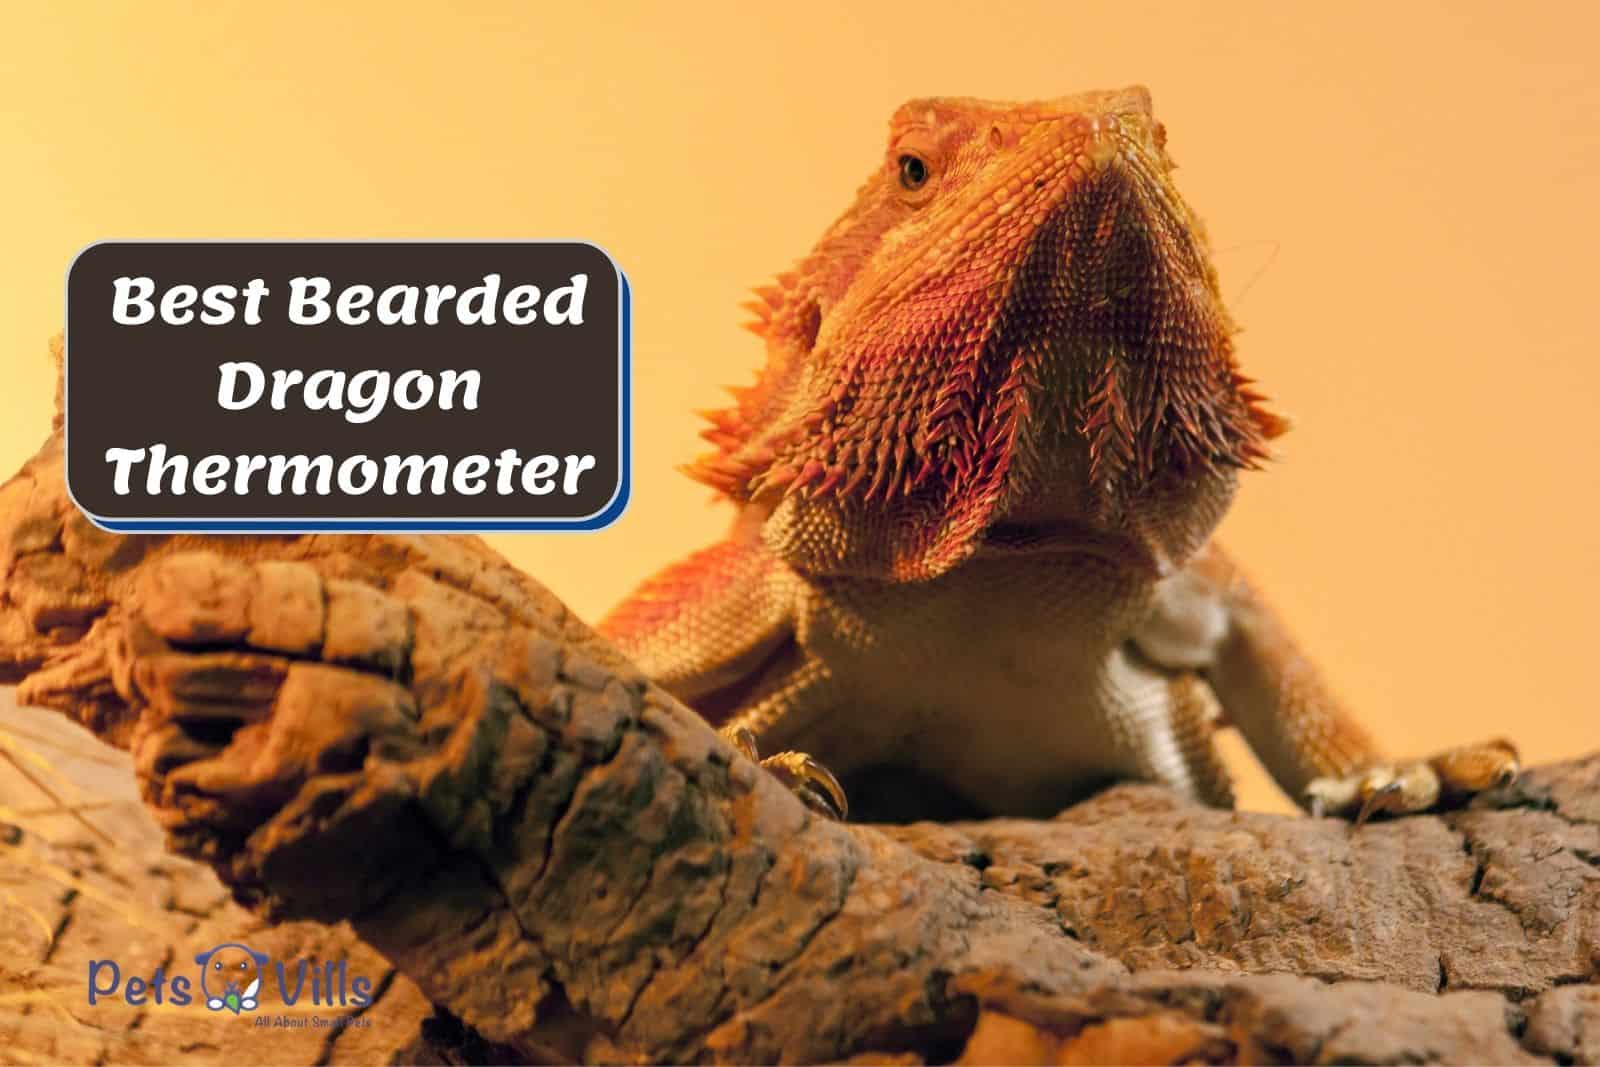 orange beardie beside Best Bearded Dragon Thermometer poster